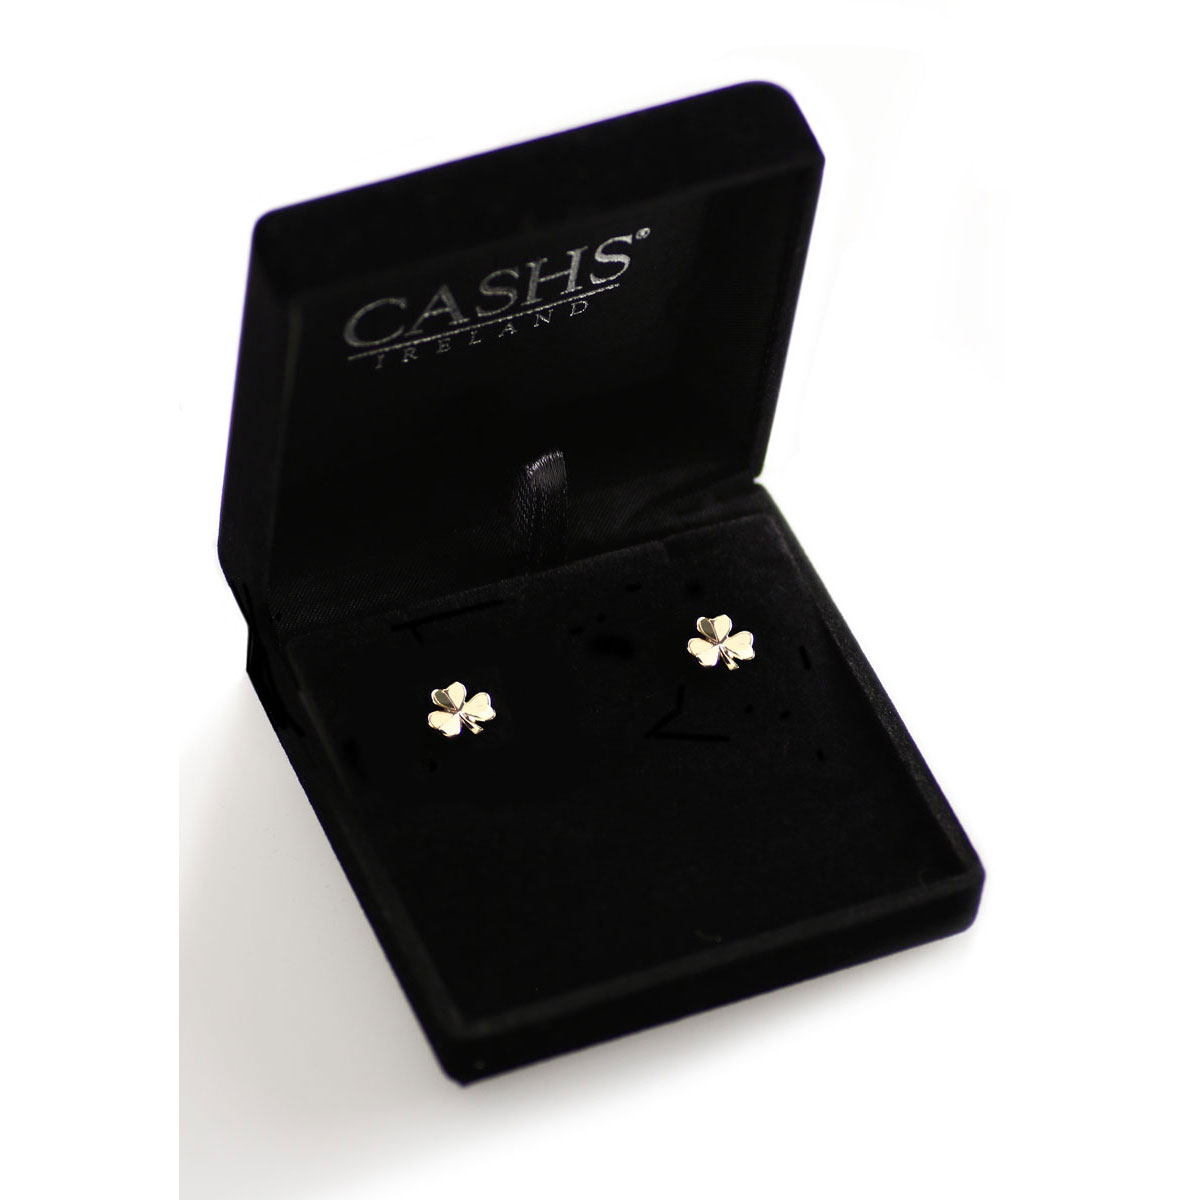 Cashs Ireland 18K Gold-Plated Shamrock Pierced Earrings Pair